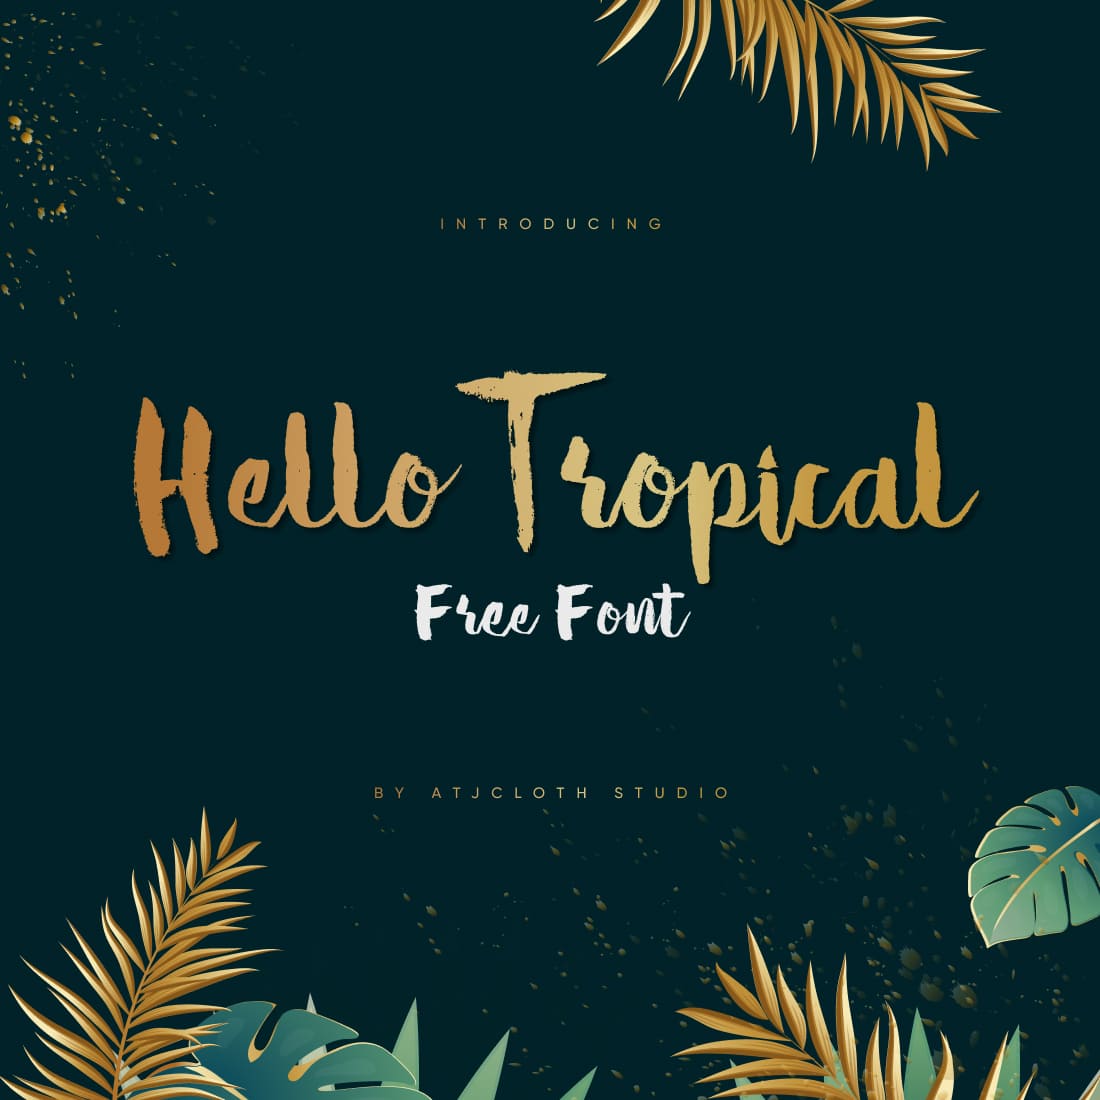 Hello Tropical Free Font Incredible MasterBundles Main Cover.